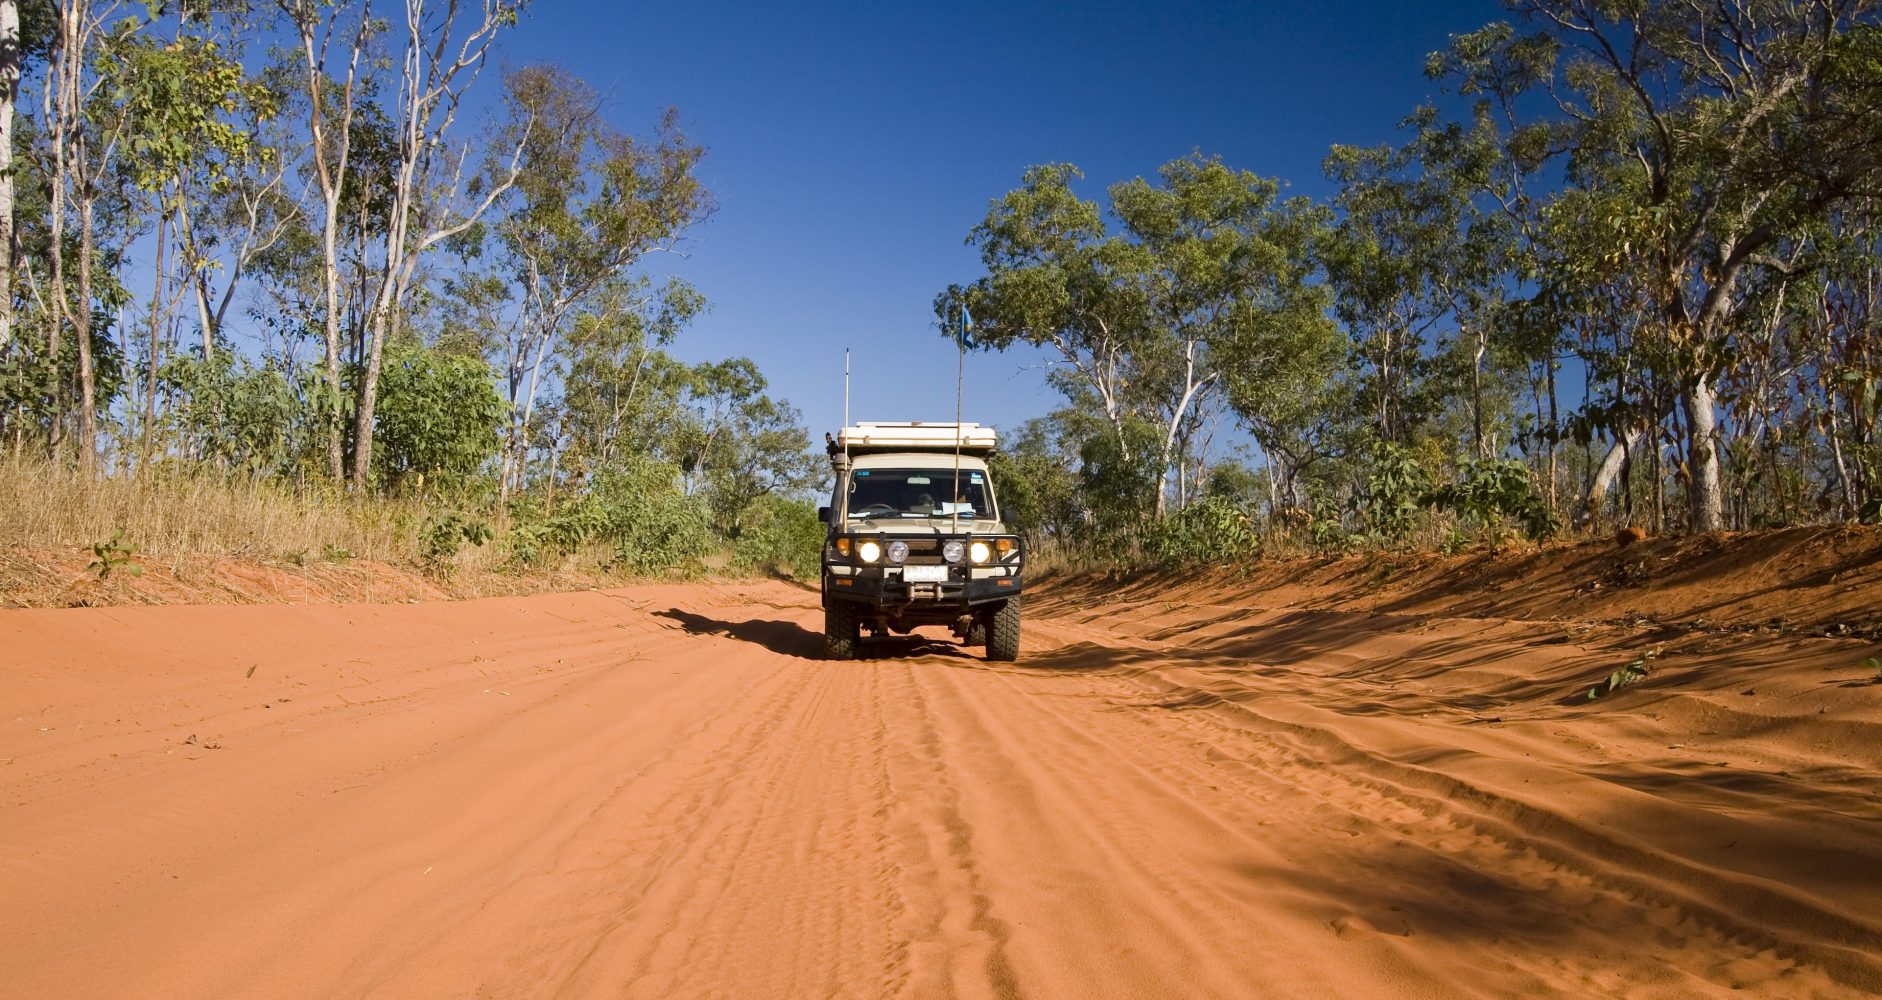 Cruising the dirt roads on the Dampier Peninsula near Cape Leveque in northern Western Australia.